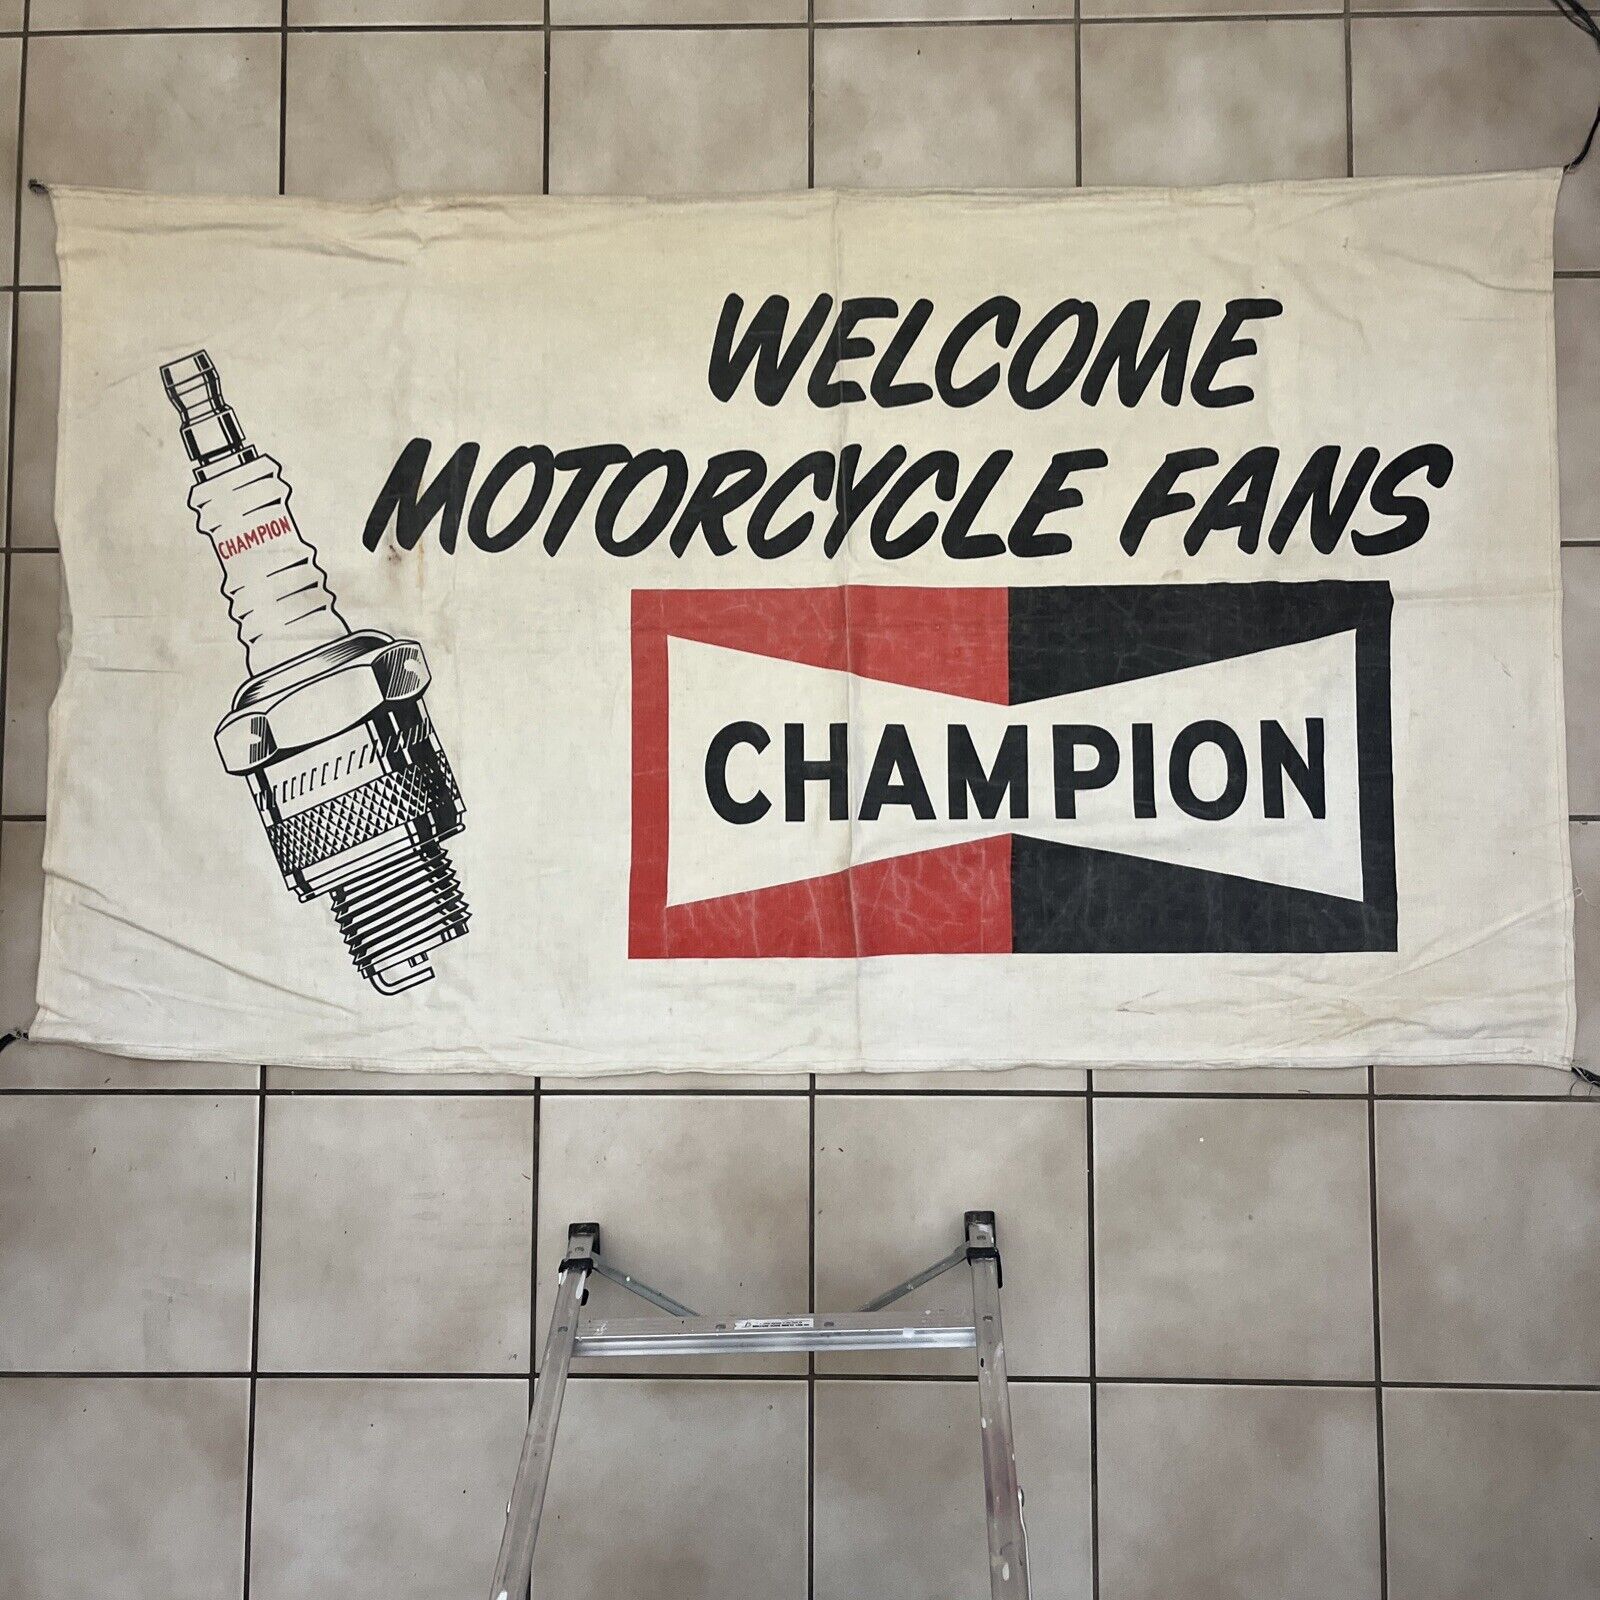 Champion Spark-Plug Advertising Banner VINTAGE 1970s Motorcycle Fans Racing Nhra